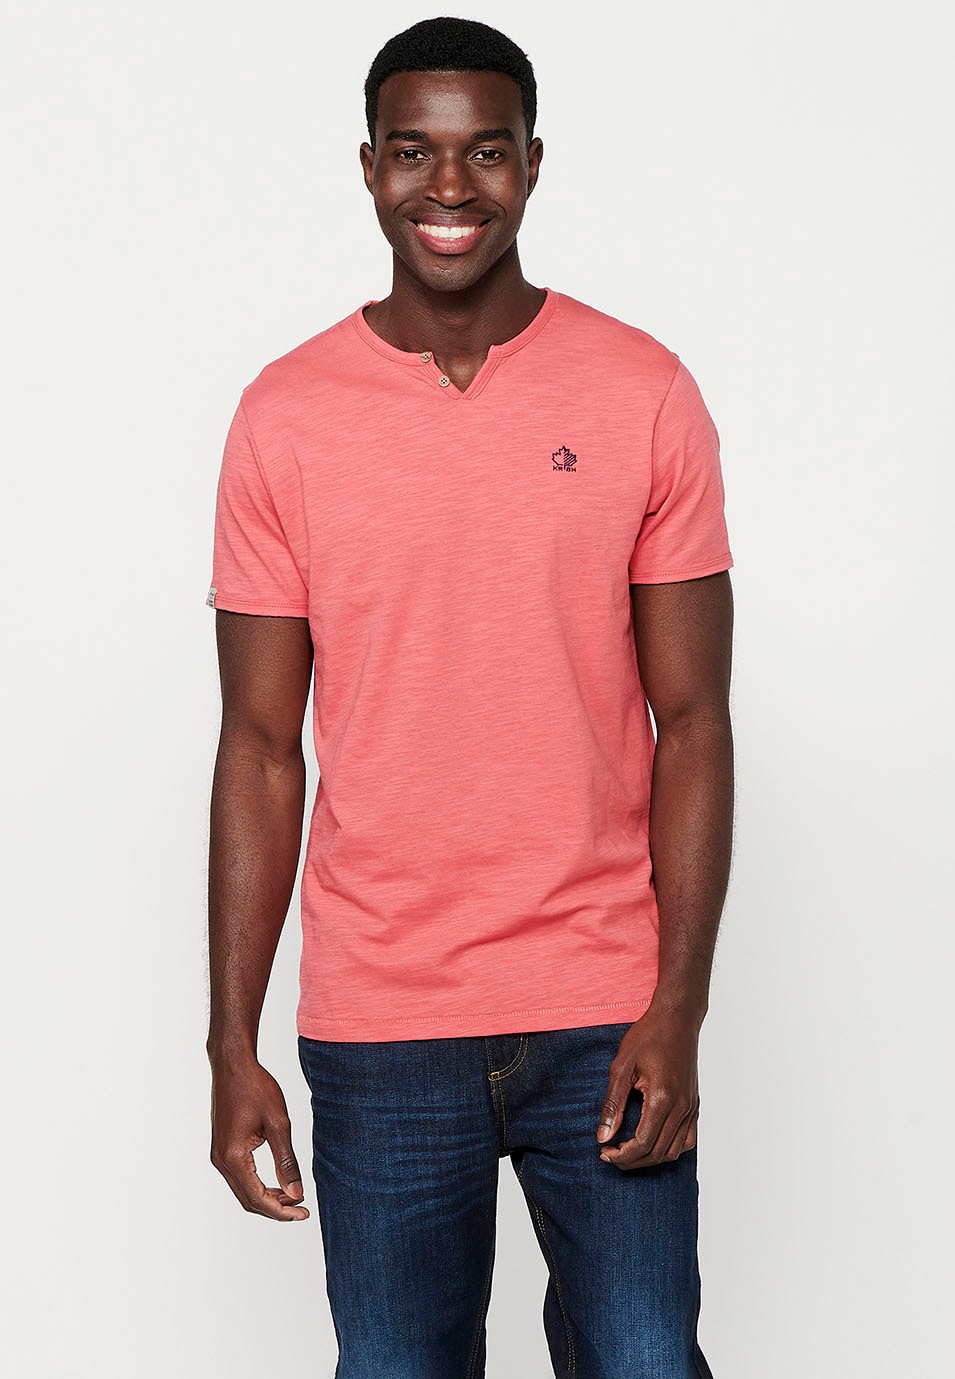 Camiseta básica de manga corta de algodón, cuello V con boton, color rosa para hombre 4